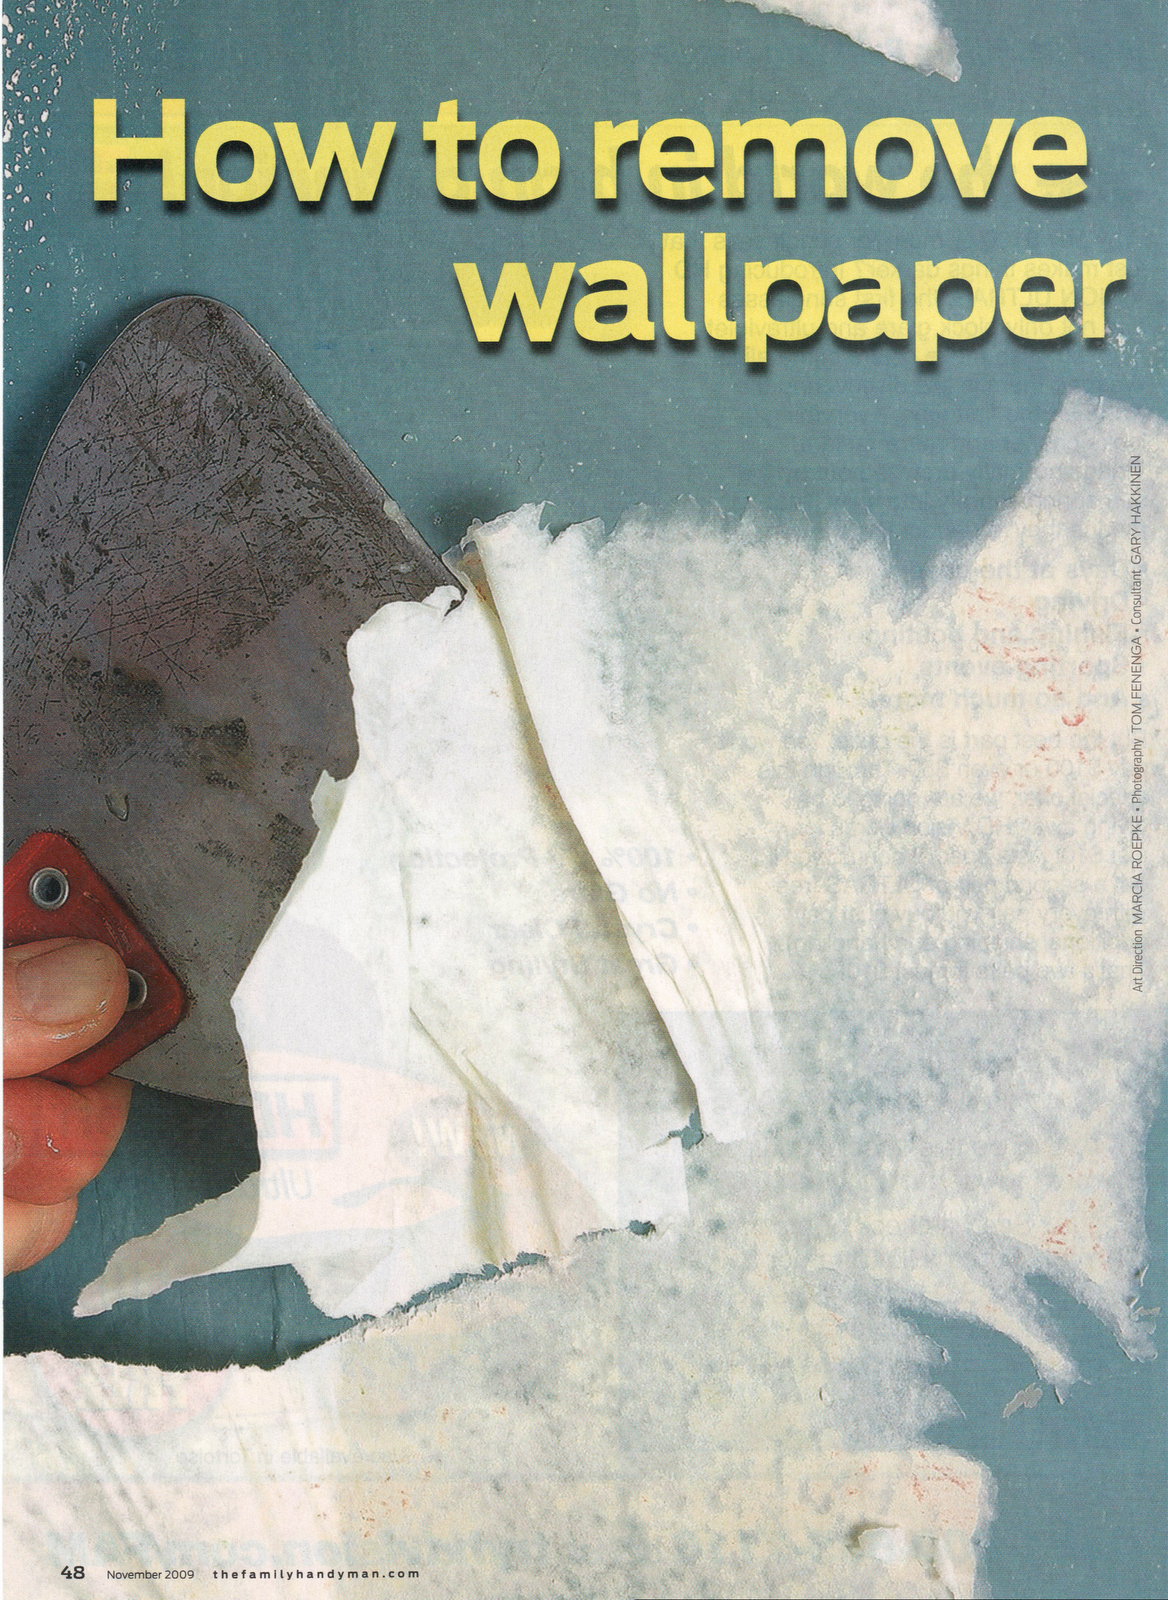 Hd Wallpapers Drywall Y Sto Therm Next 1020 X 420 158 Kb Jpeg HD 1168x1600